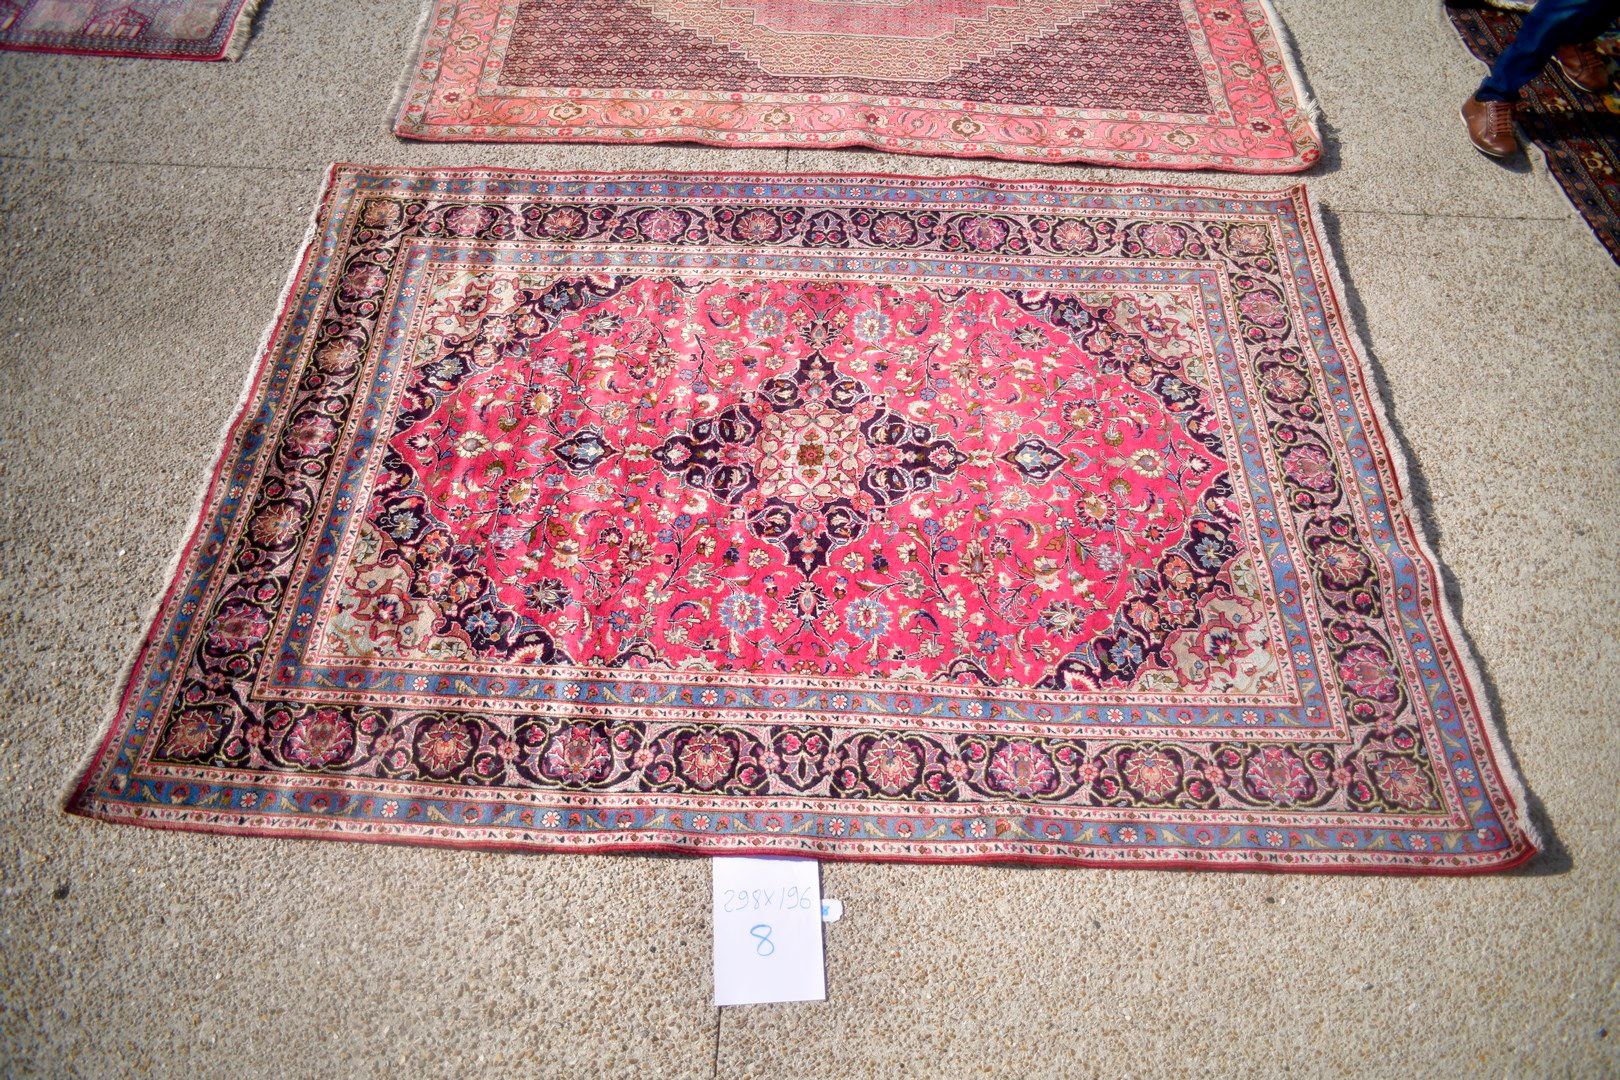 Null 卡尚（伊朗），1975年。

棉质地面上的高品质丝质羊羔毛绒。

紫红色的场地上有一卷开花的棕榈树，中间有一个拉长的钻石形式的午夜蓝色花纹奖章。

状&hellip;